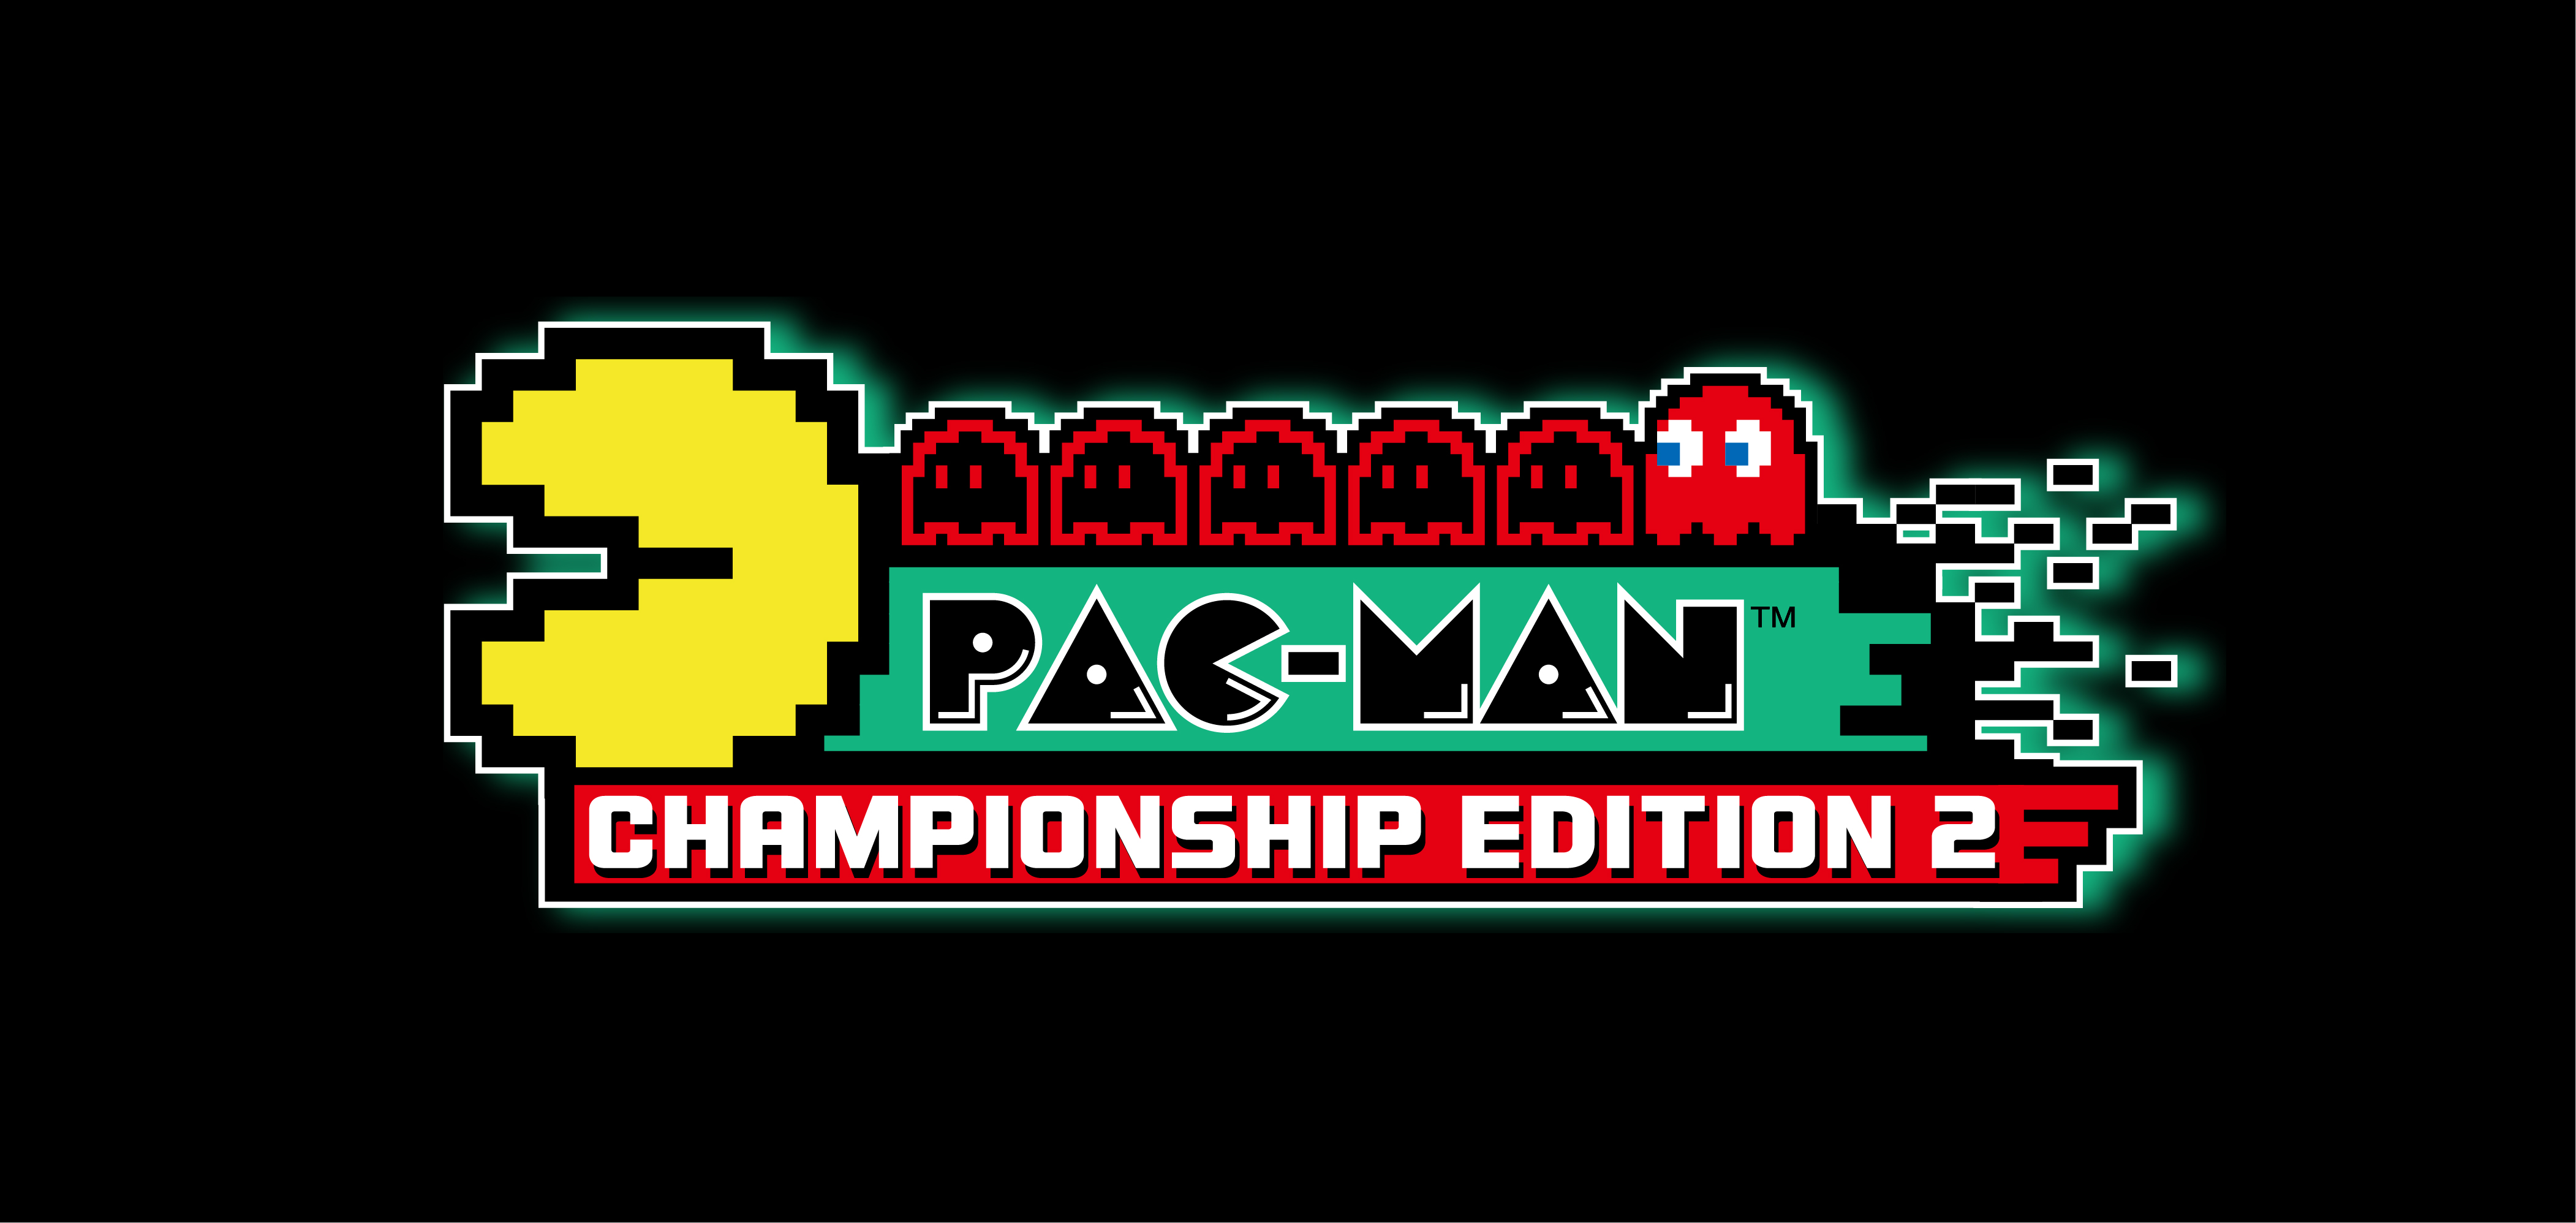 Pac man championship. Pacman Championship Edition 2. Pac-man Championship Edition. Pacman Championship Edition 2 логотип. Pac man Championship Edition DX+.